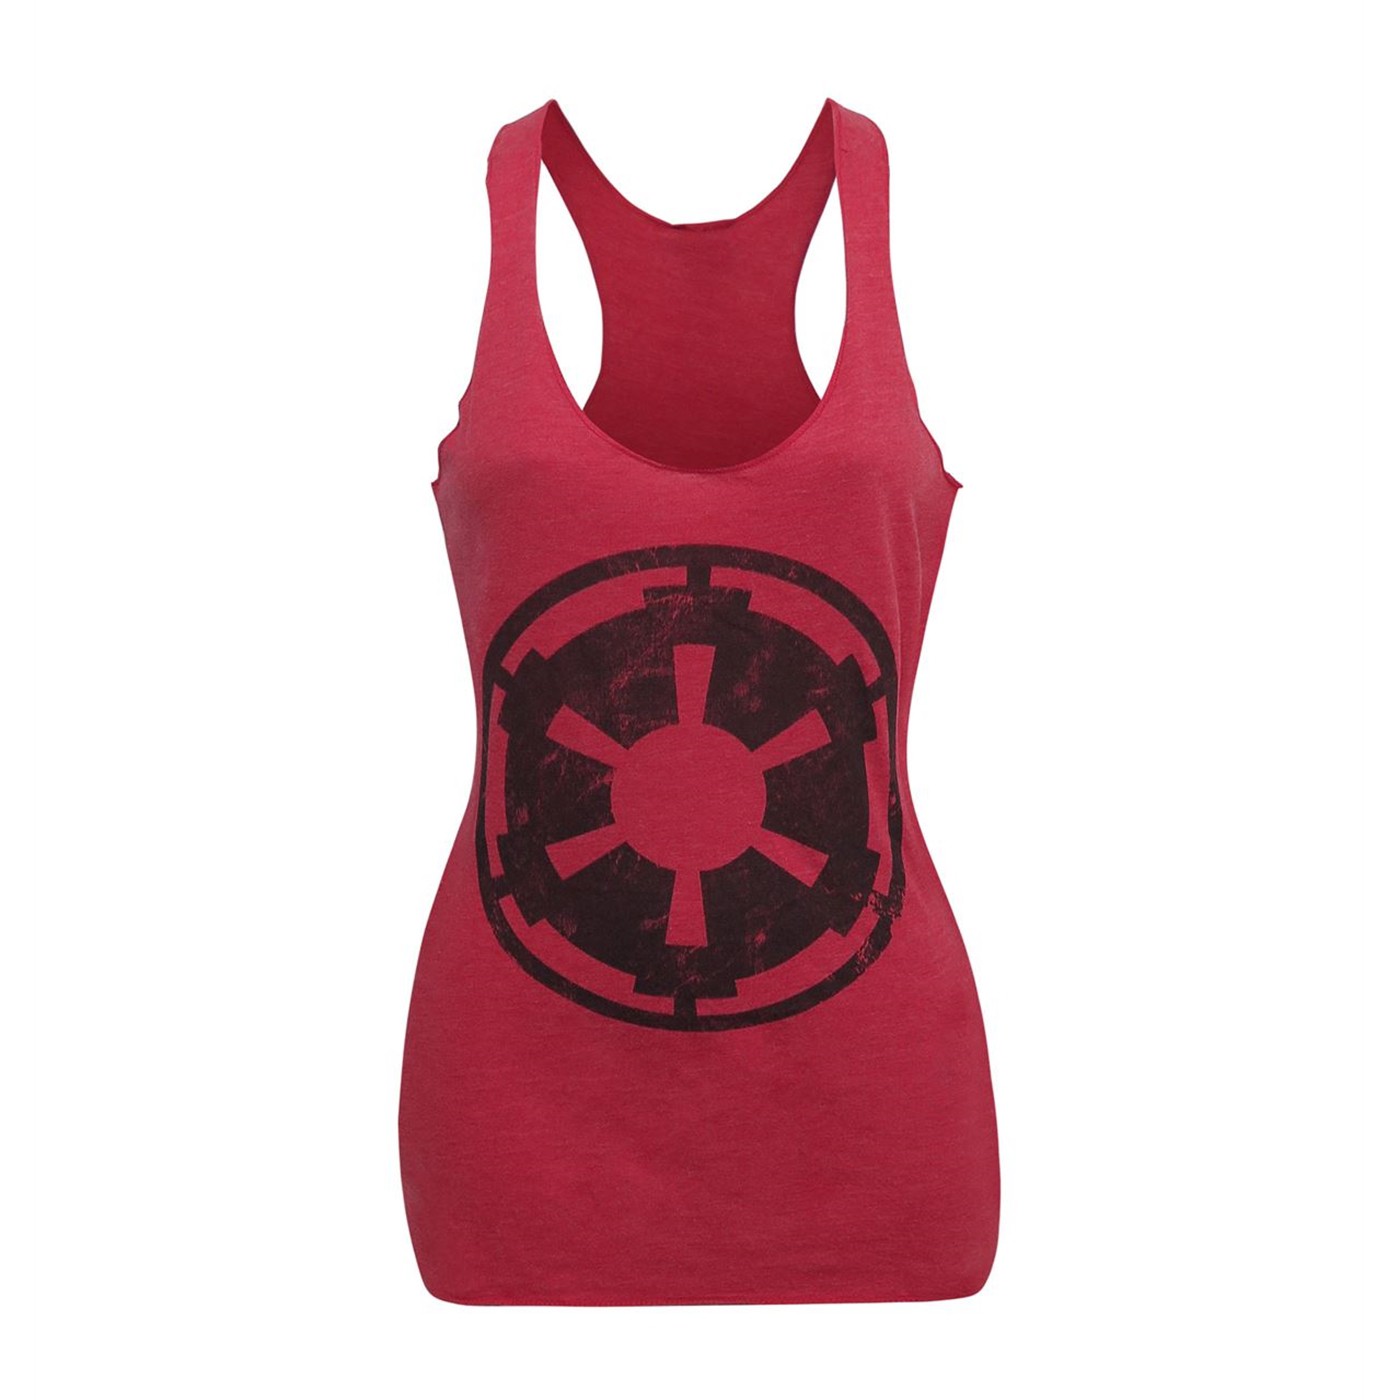 Star Wars Empire Symbol Heather-Red Women's Tank Top